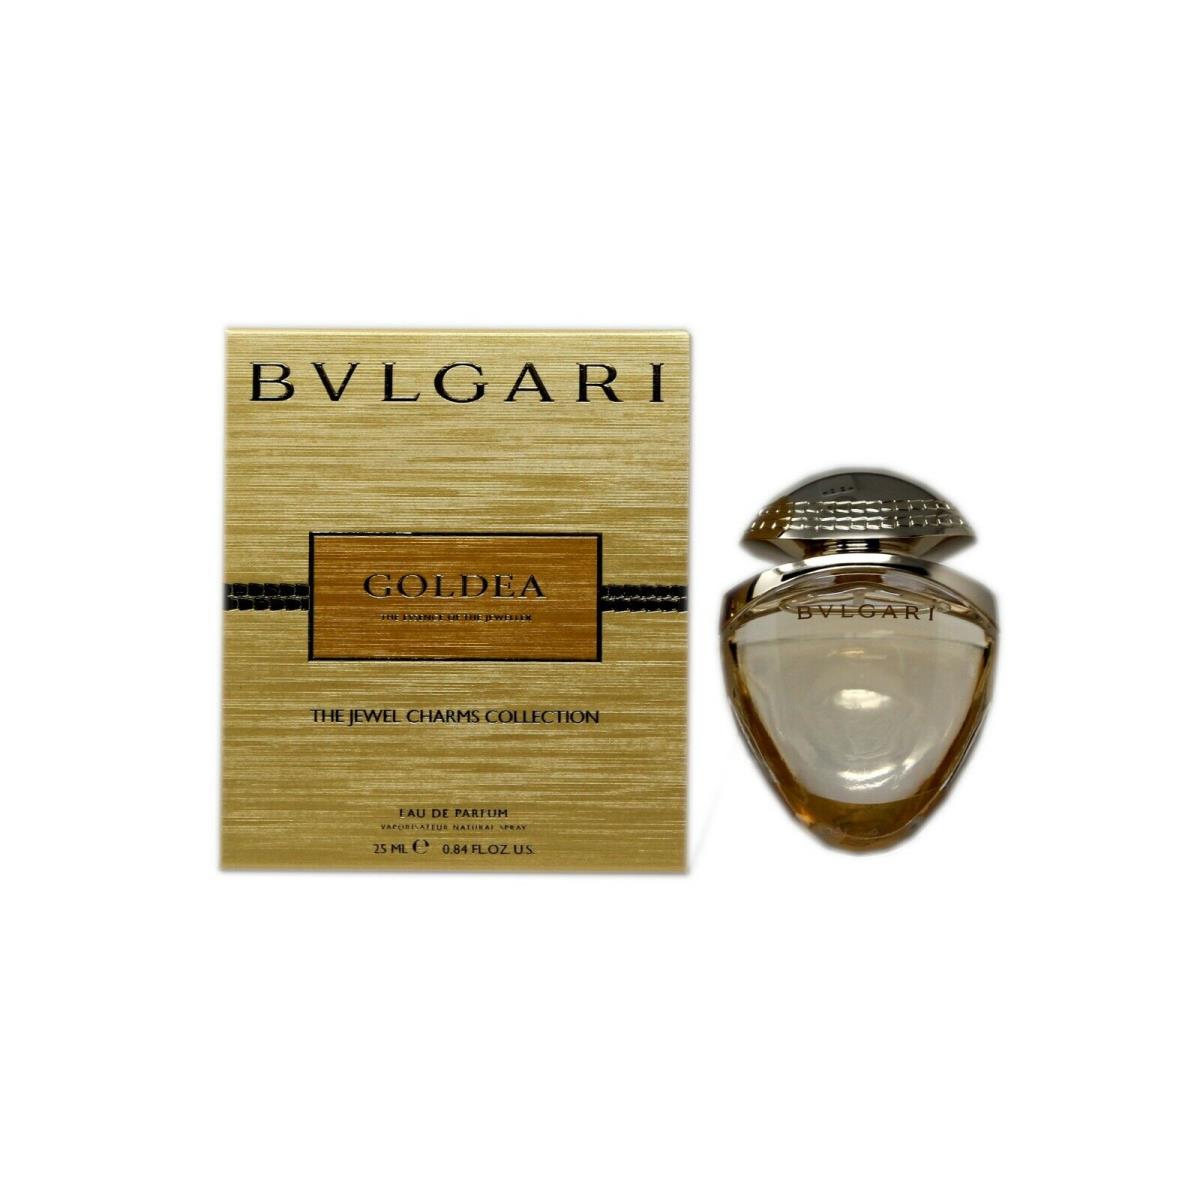 Bvlgari Goldea The Jewel Charms Collection Eau DE Parfum Spray 25 ML/0.84 OZ